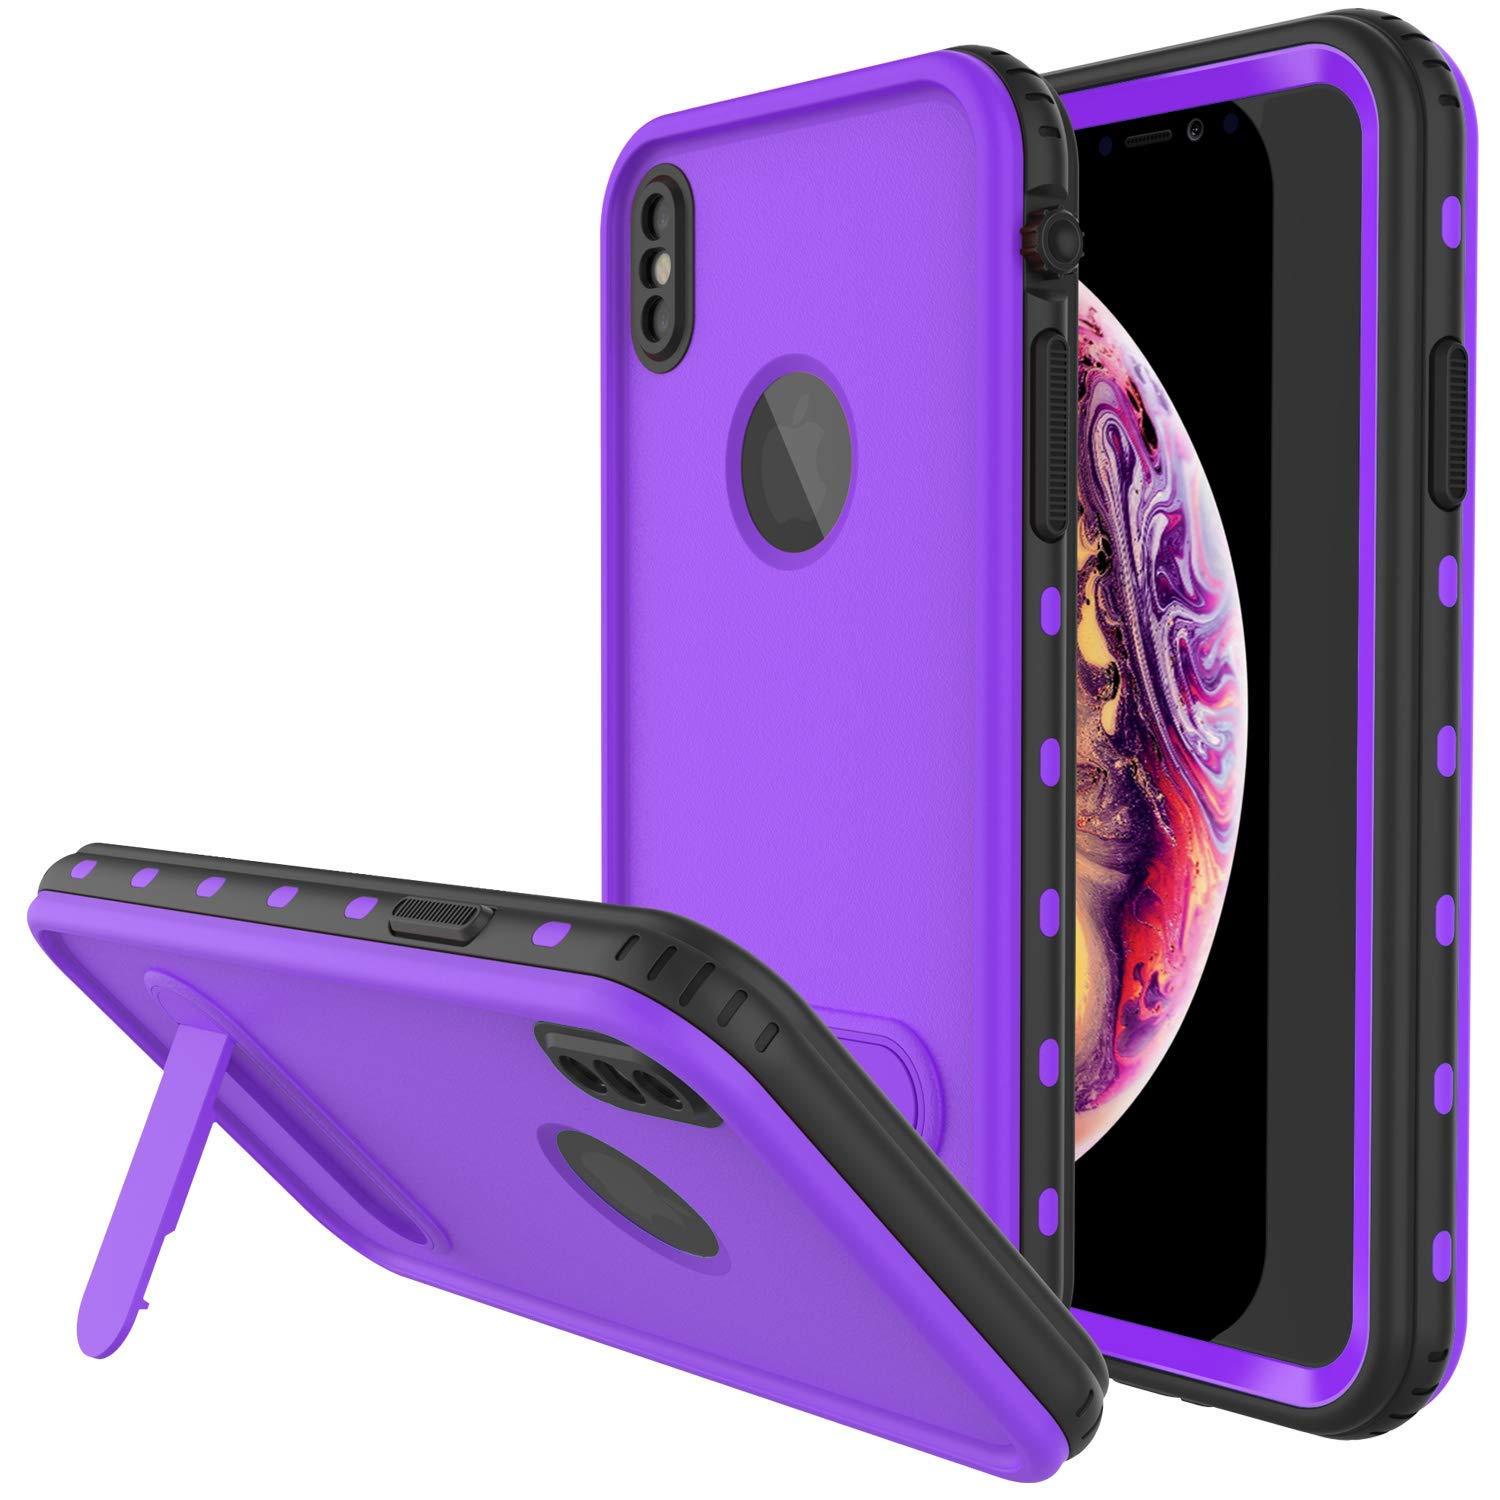 Punkcase iPhone XR Waterproof Case [Aqua Series] Armor Cover [Clear Purple]  [Clear Back]